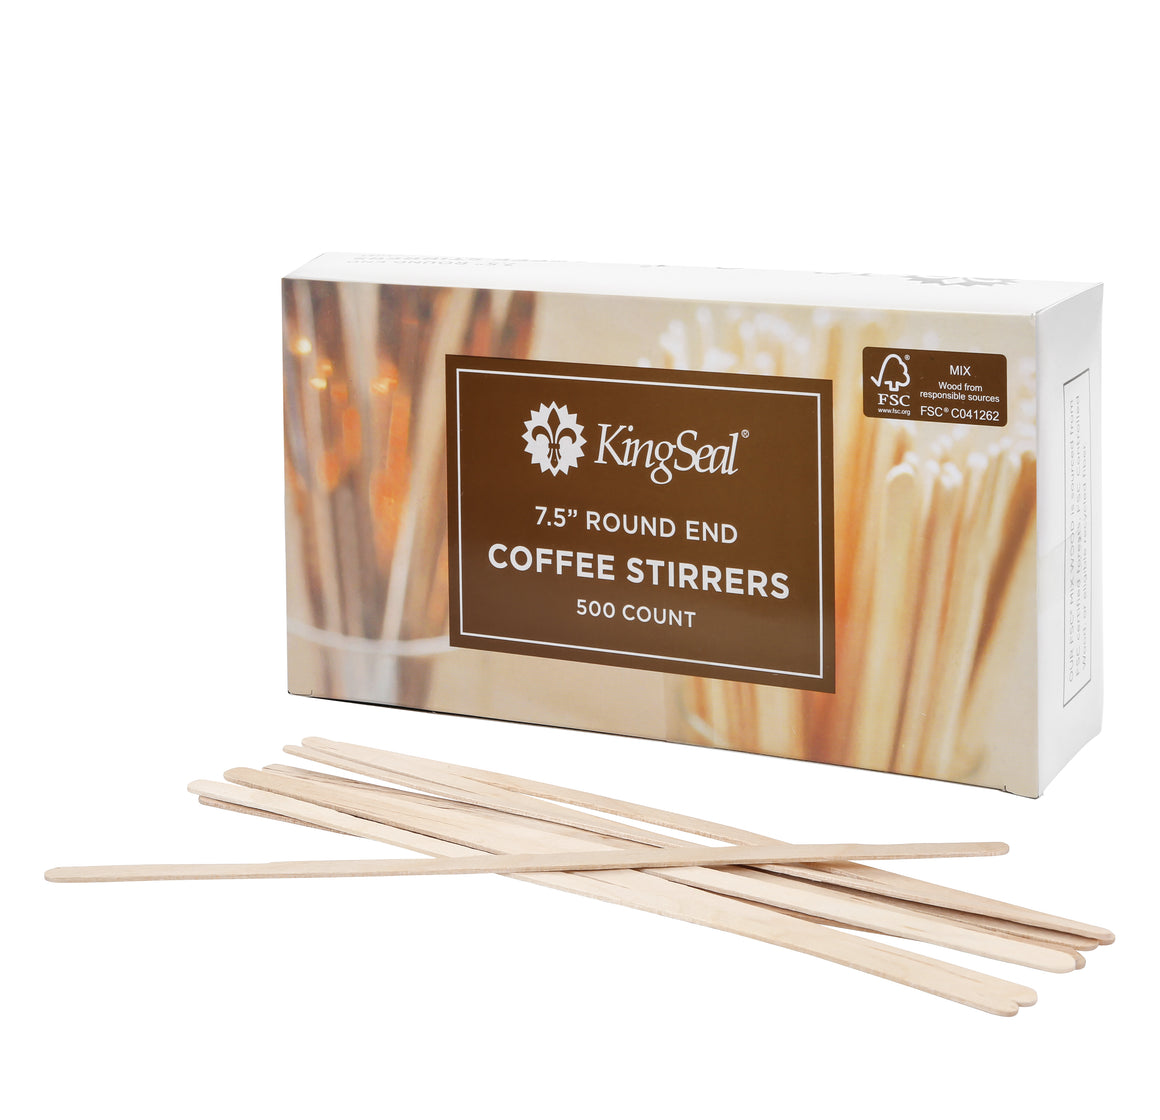 KingSeal FSC® C041262 Certified Birch Wood Coffee Stirrers, Stir Sticks, Round End - 7.5 Inch